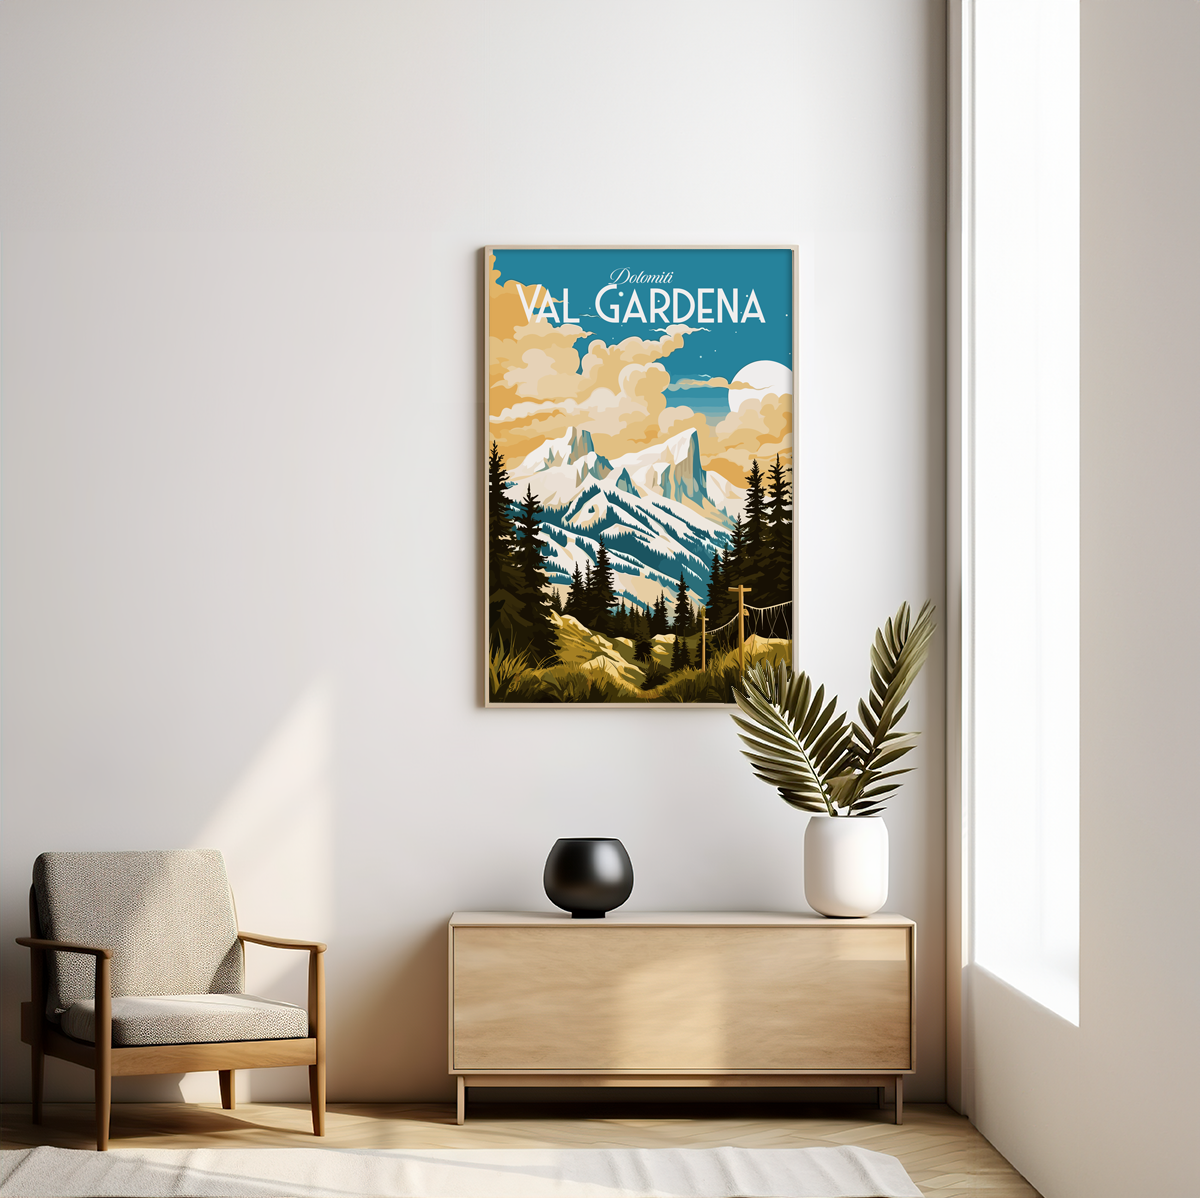 Val Gardena poster by bon voyage design